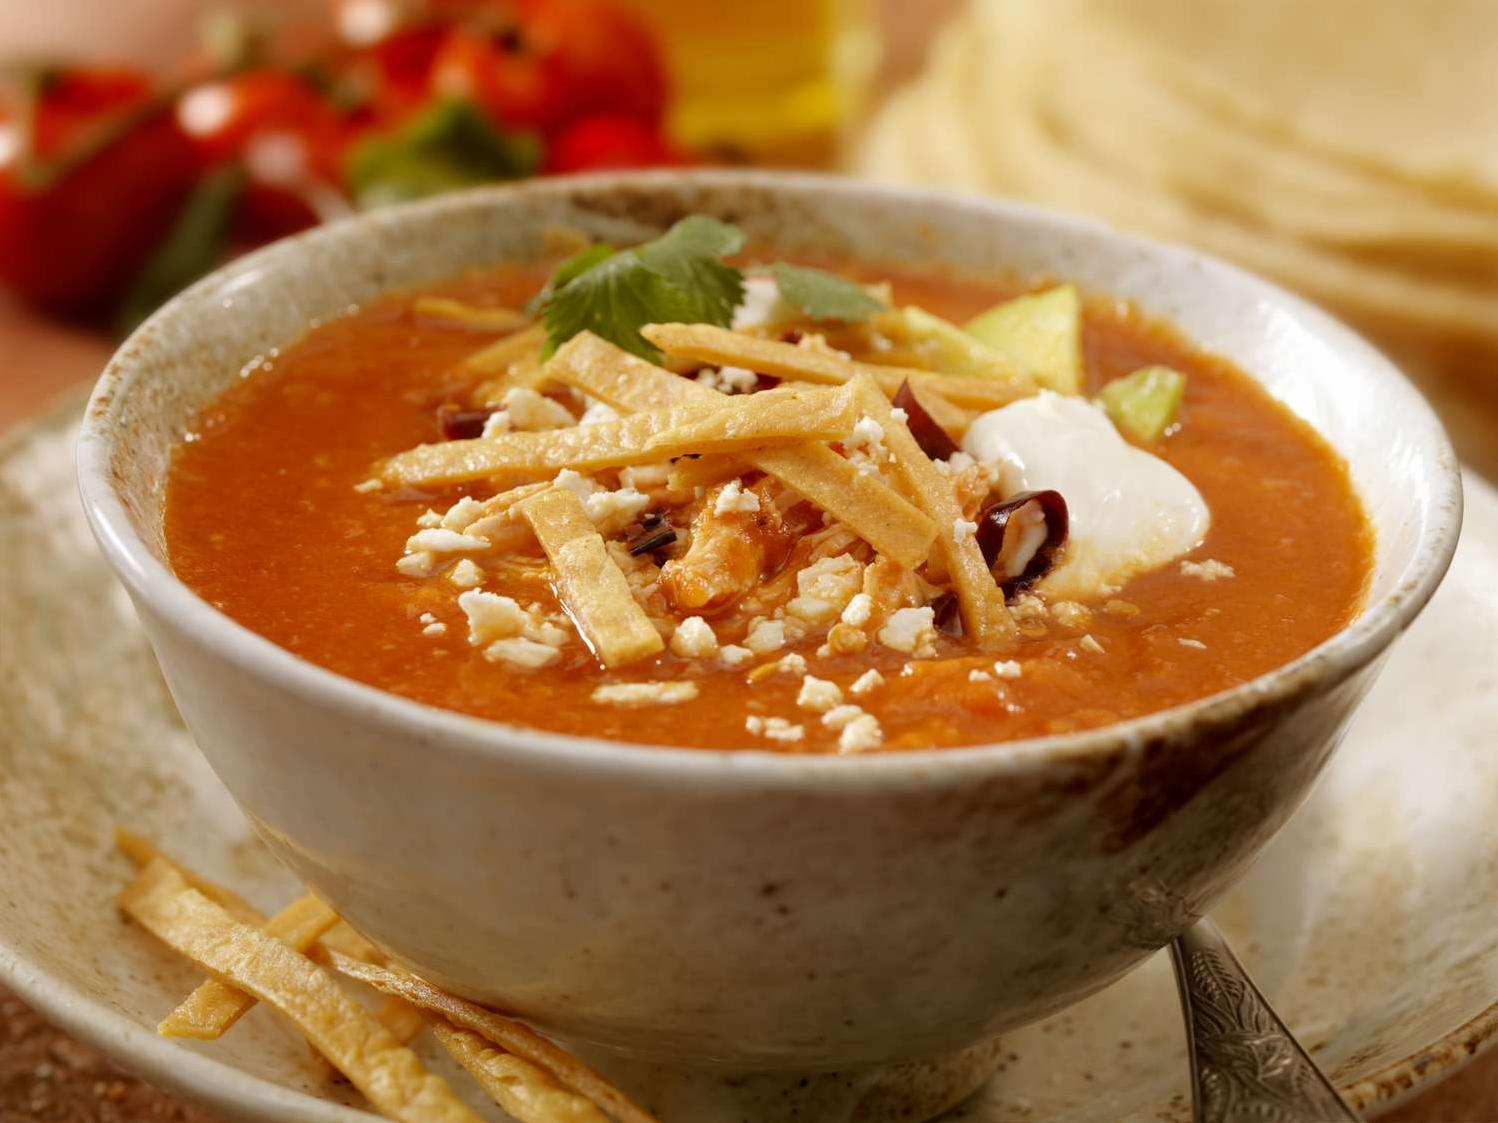  Bold flavors of cumin, chili powder, and garlic give the soup a kick